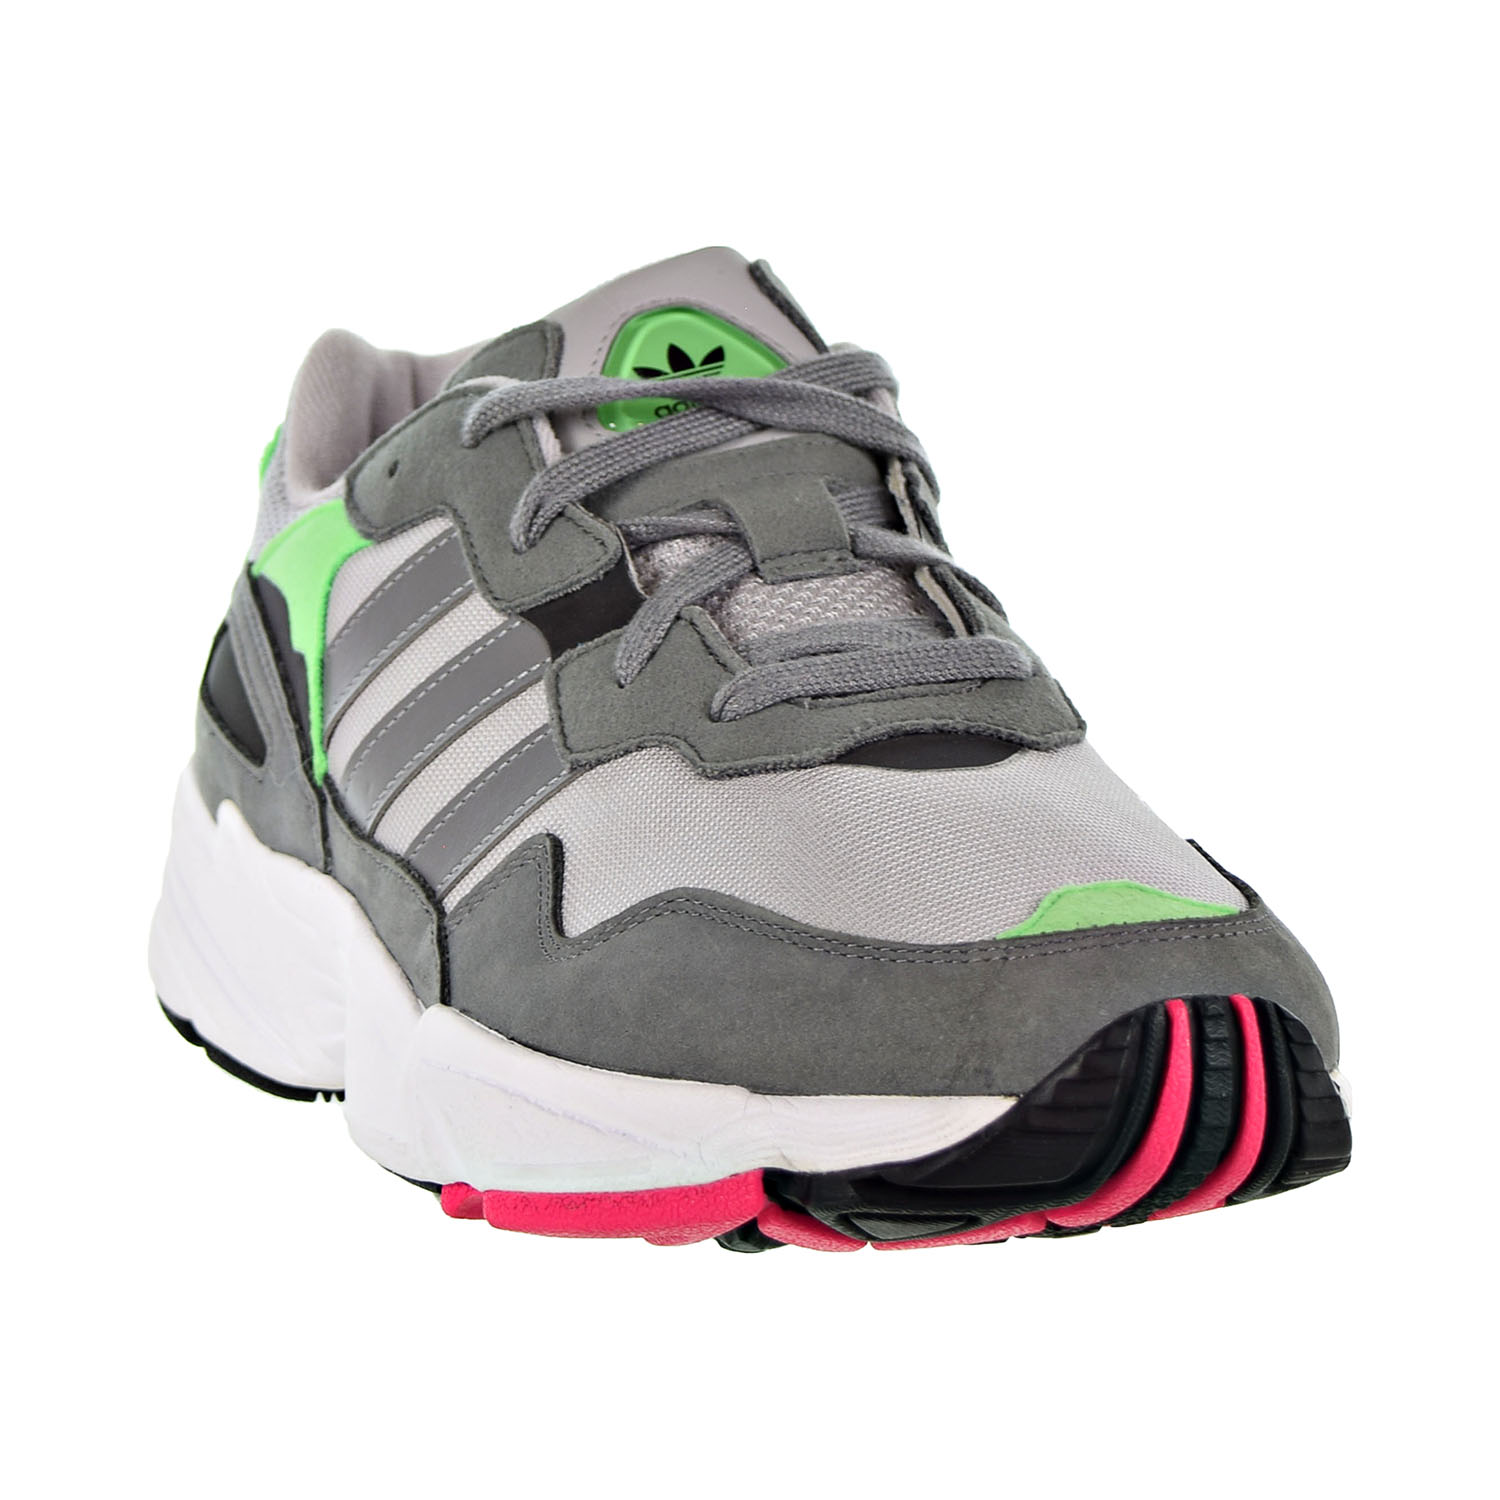 Adidas Yung-96 Men's Shoes Grey Two-Grey Three-Shock Pink f35020